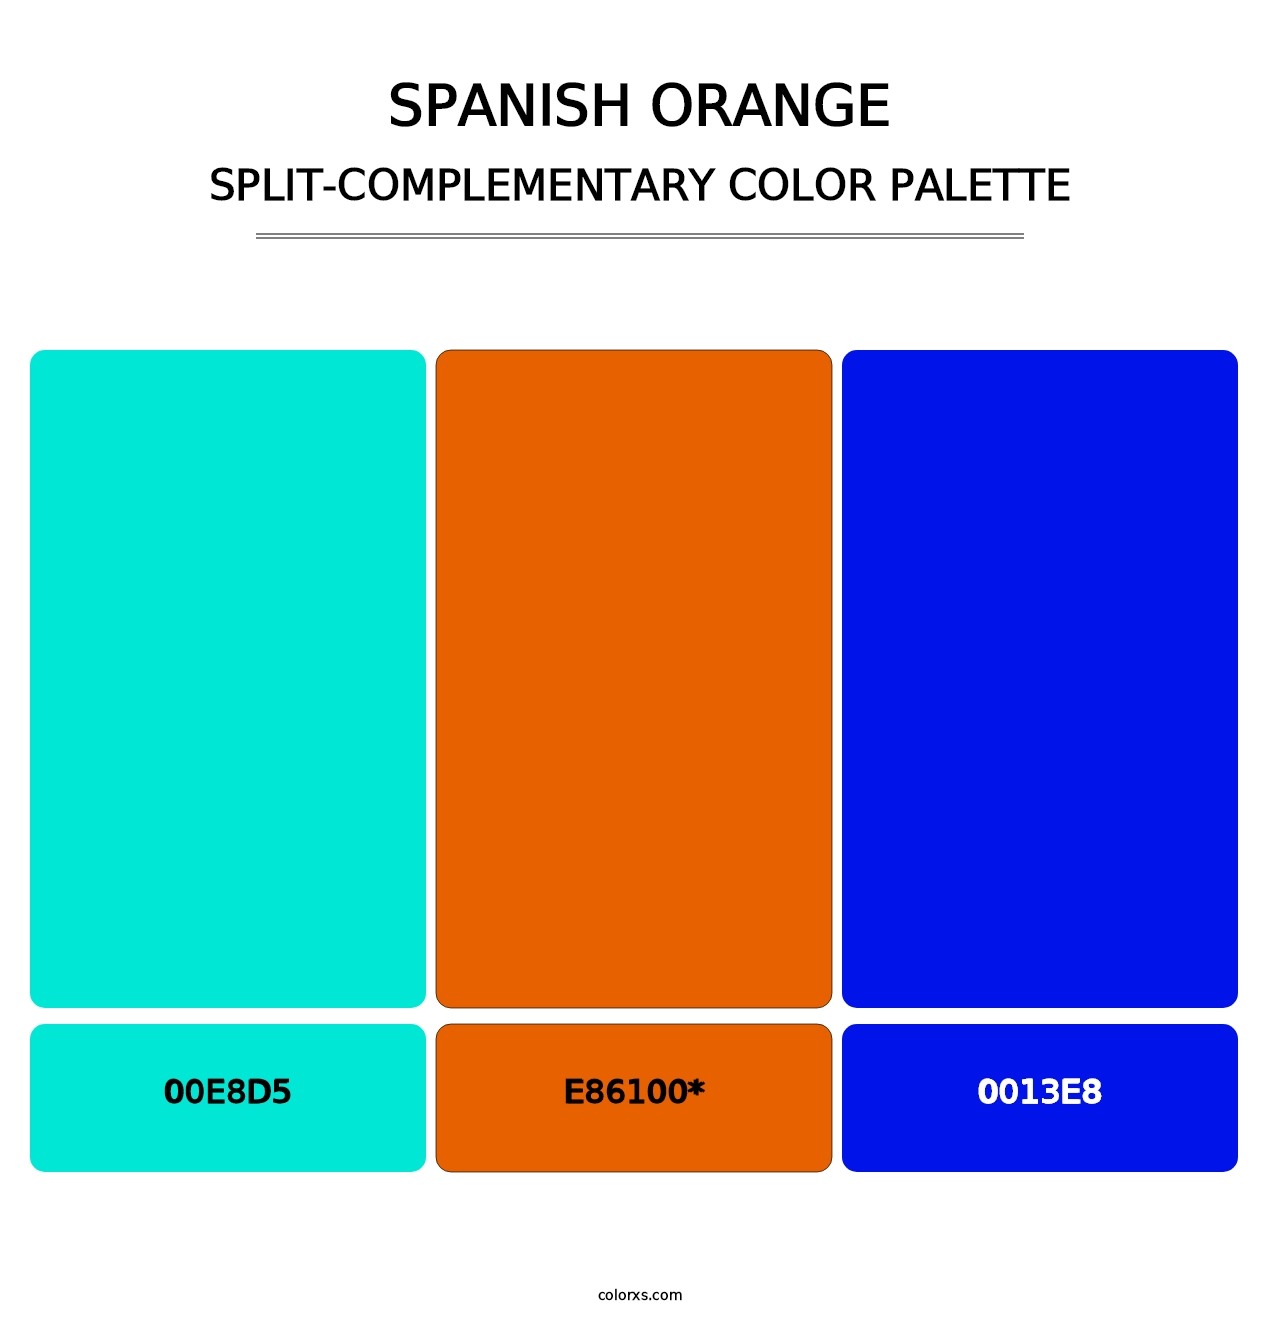 Spanish Orange - Split-Complementary Color Palette